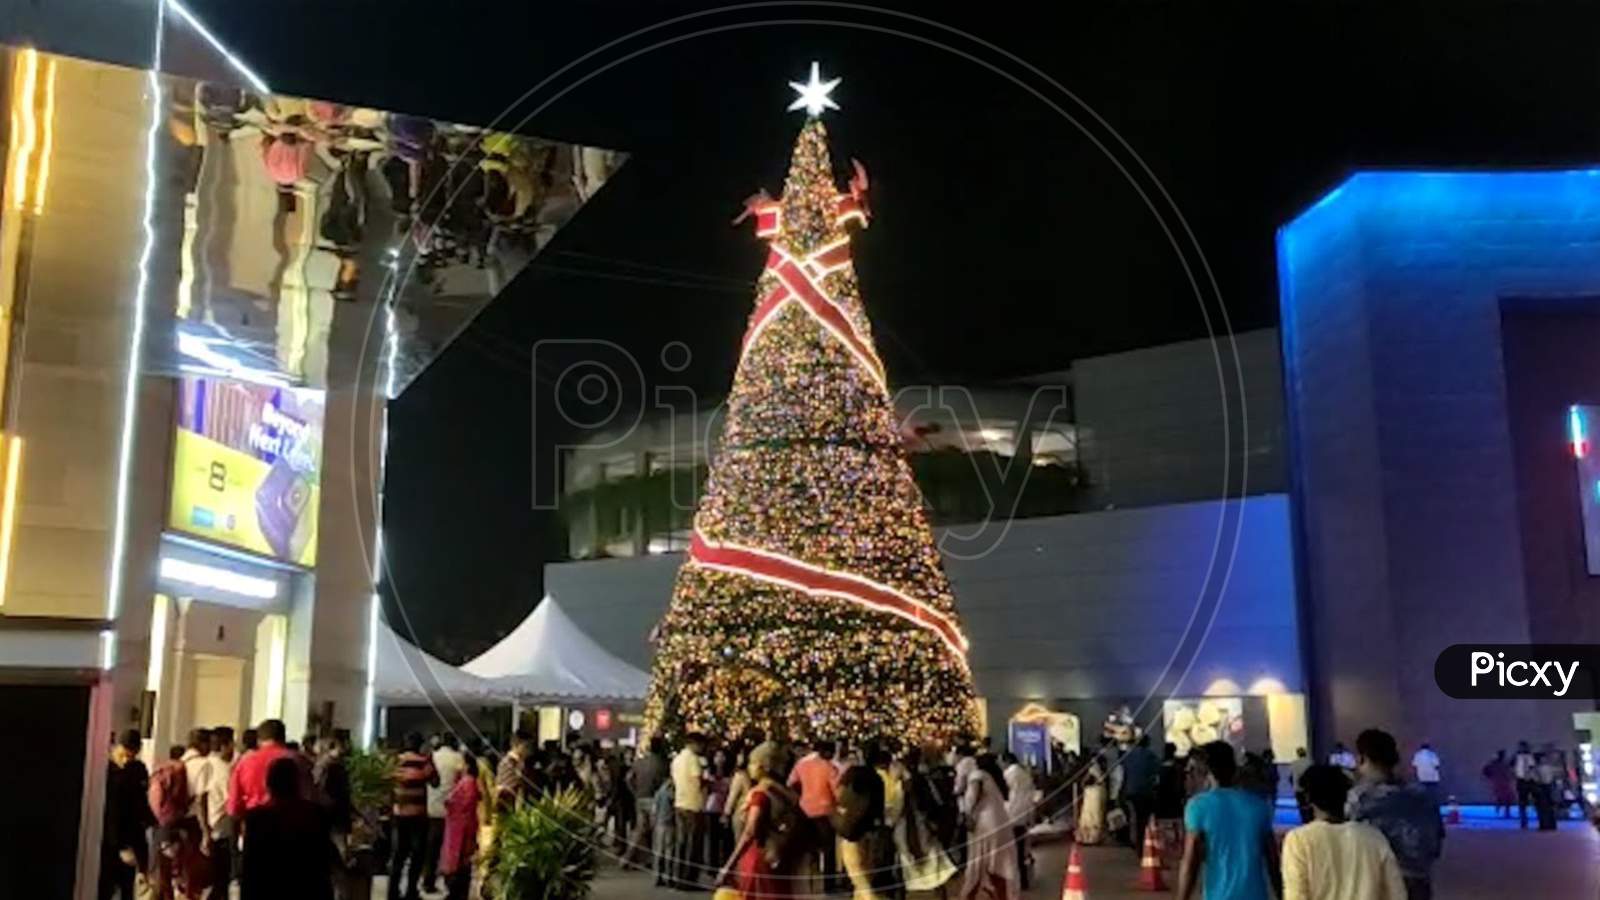 Amazing Christmas tree with lighting